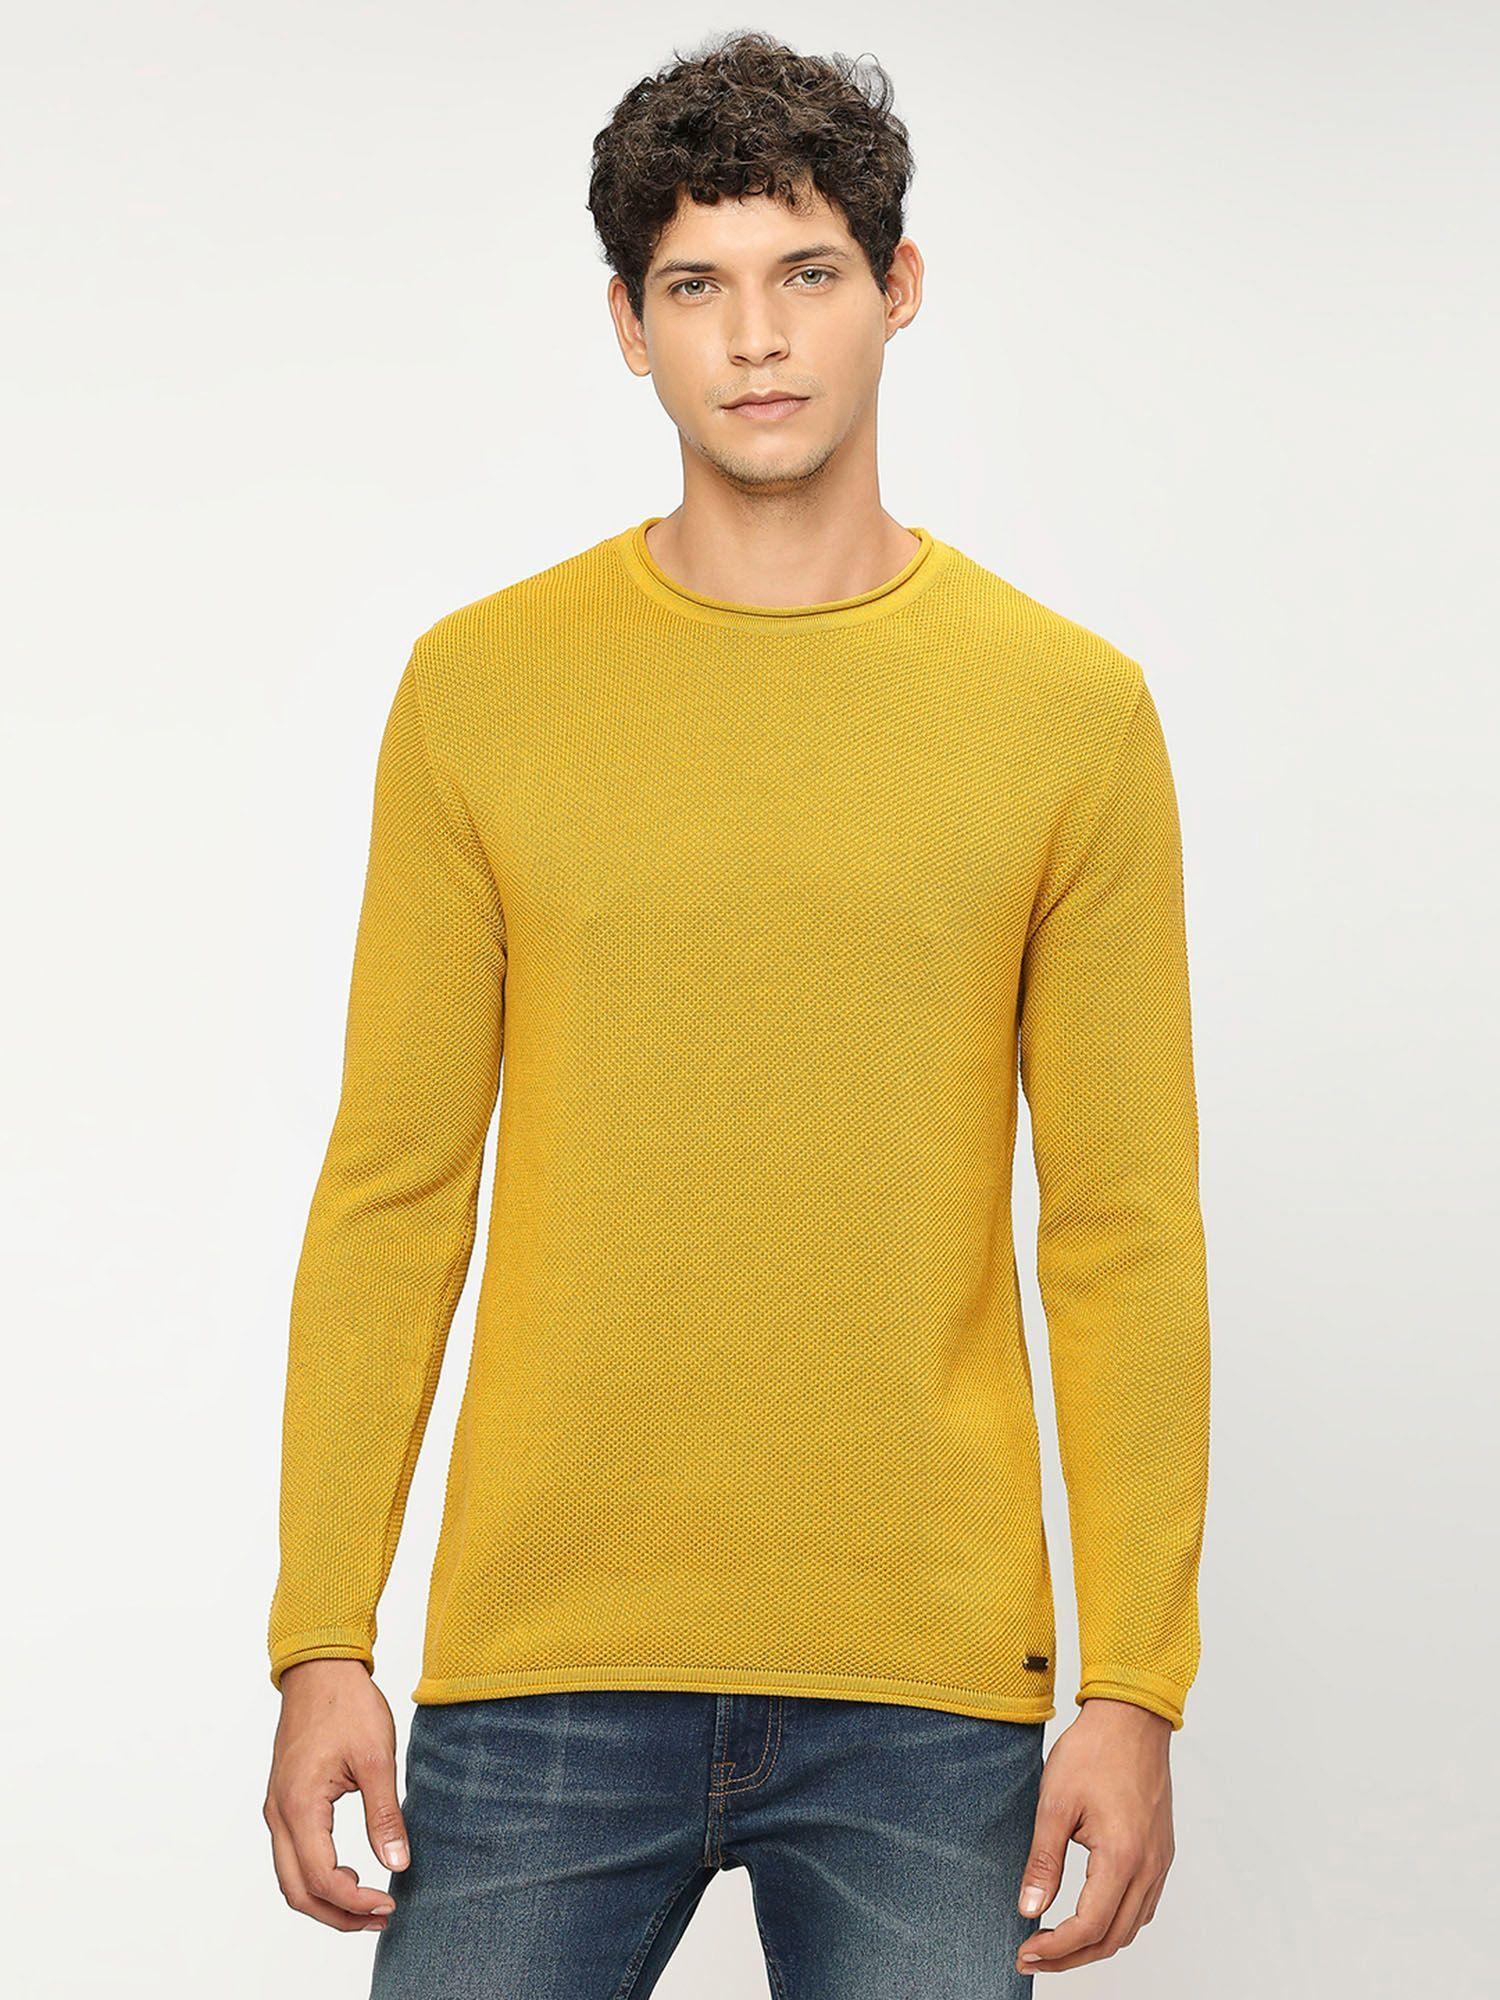 yellow lightweight long sleeve sweater